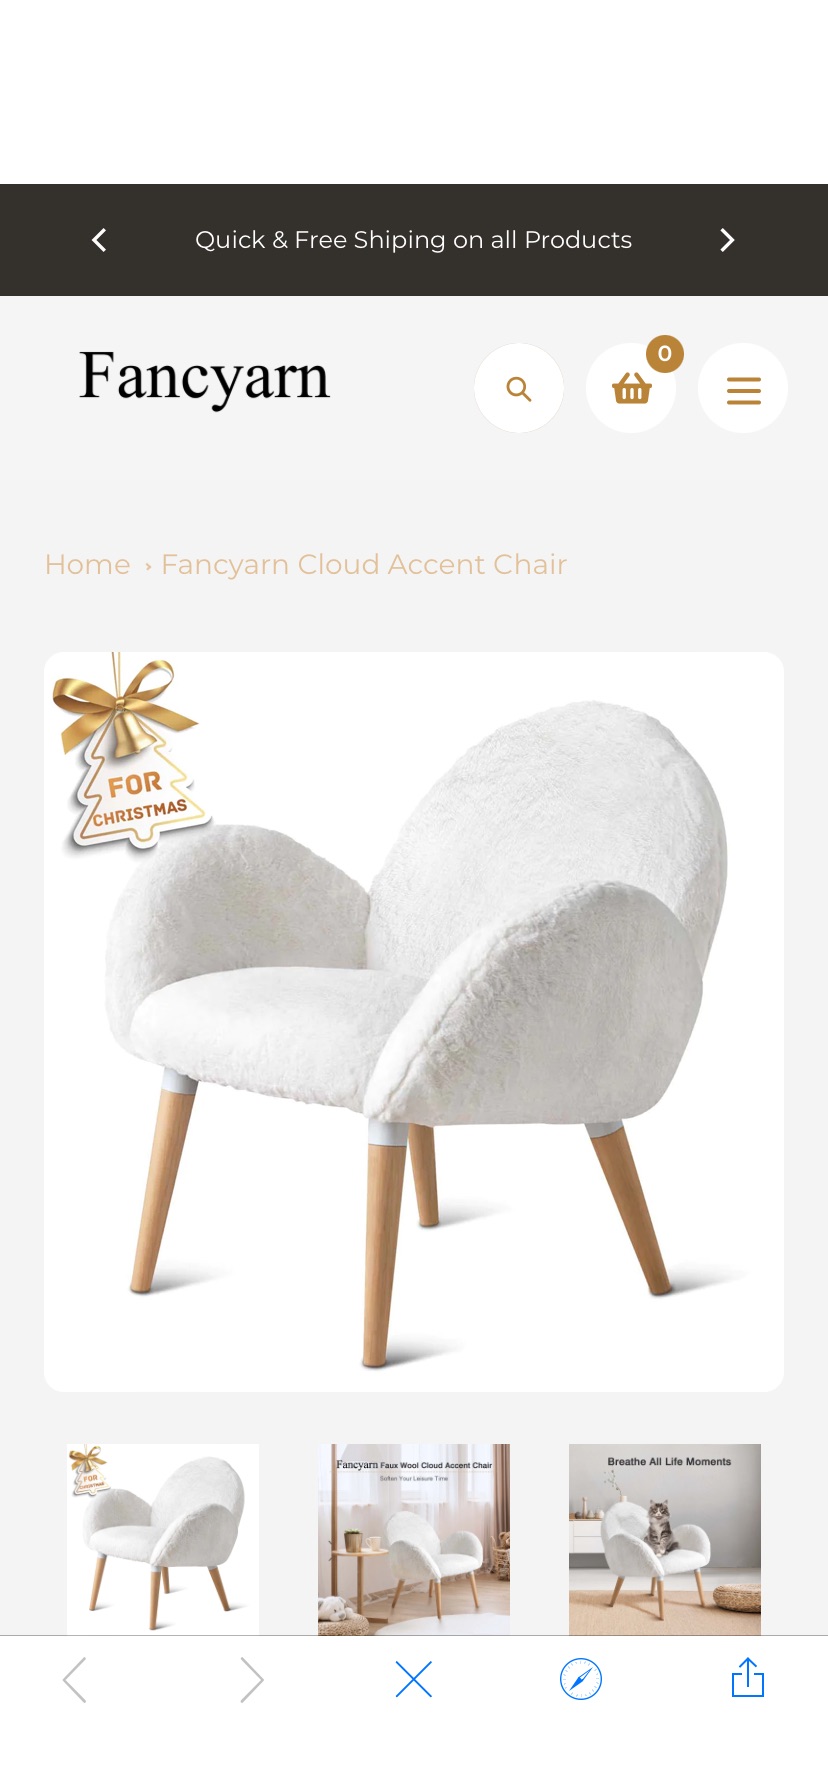 Fancyarn Cloud Accent Chair